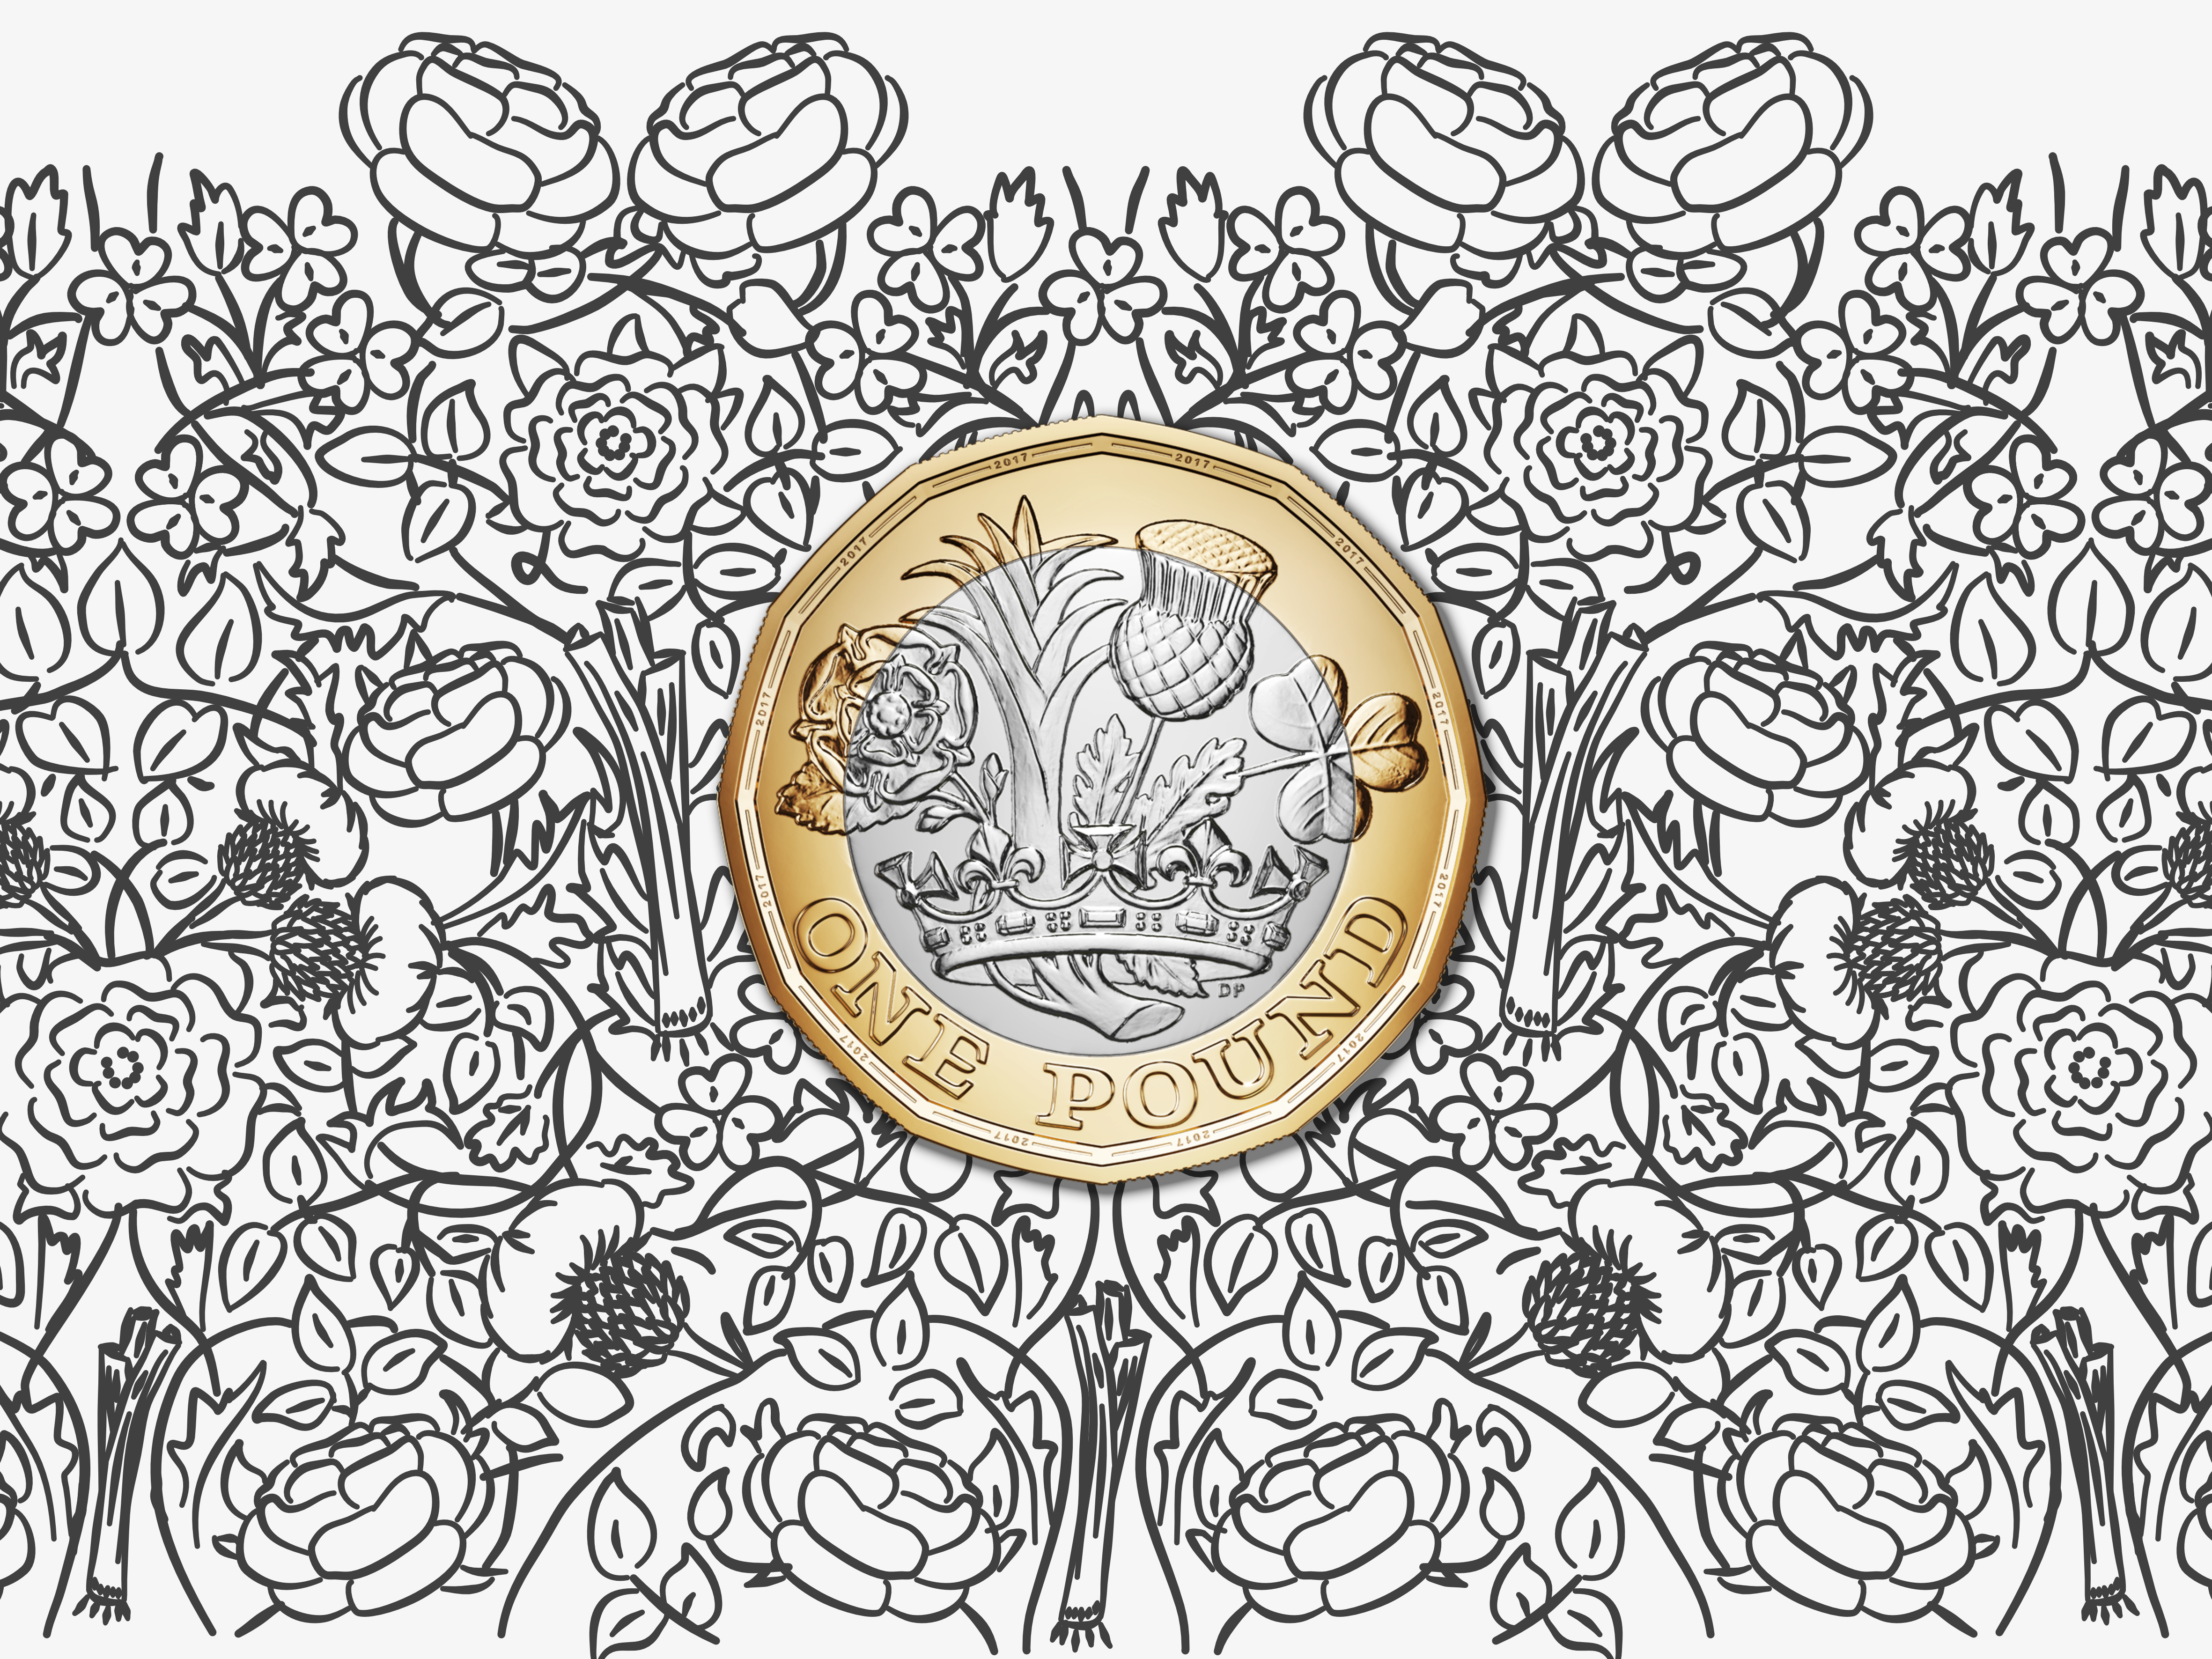 New pound coin design illustration